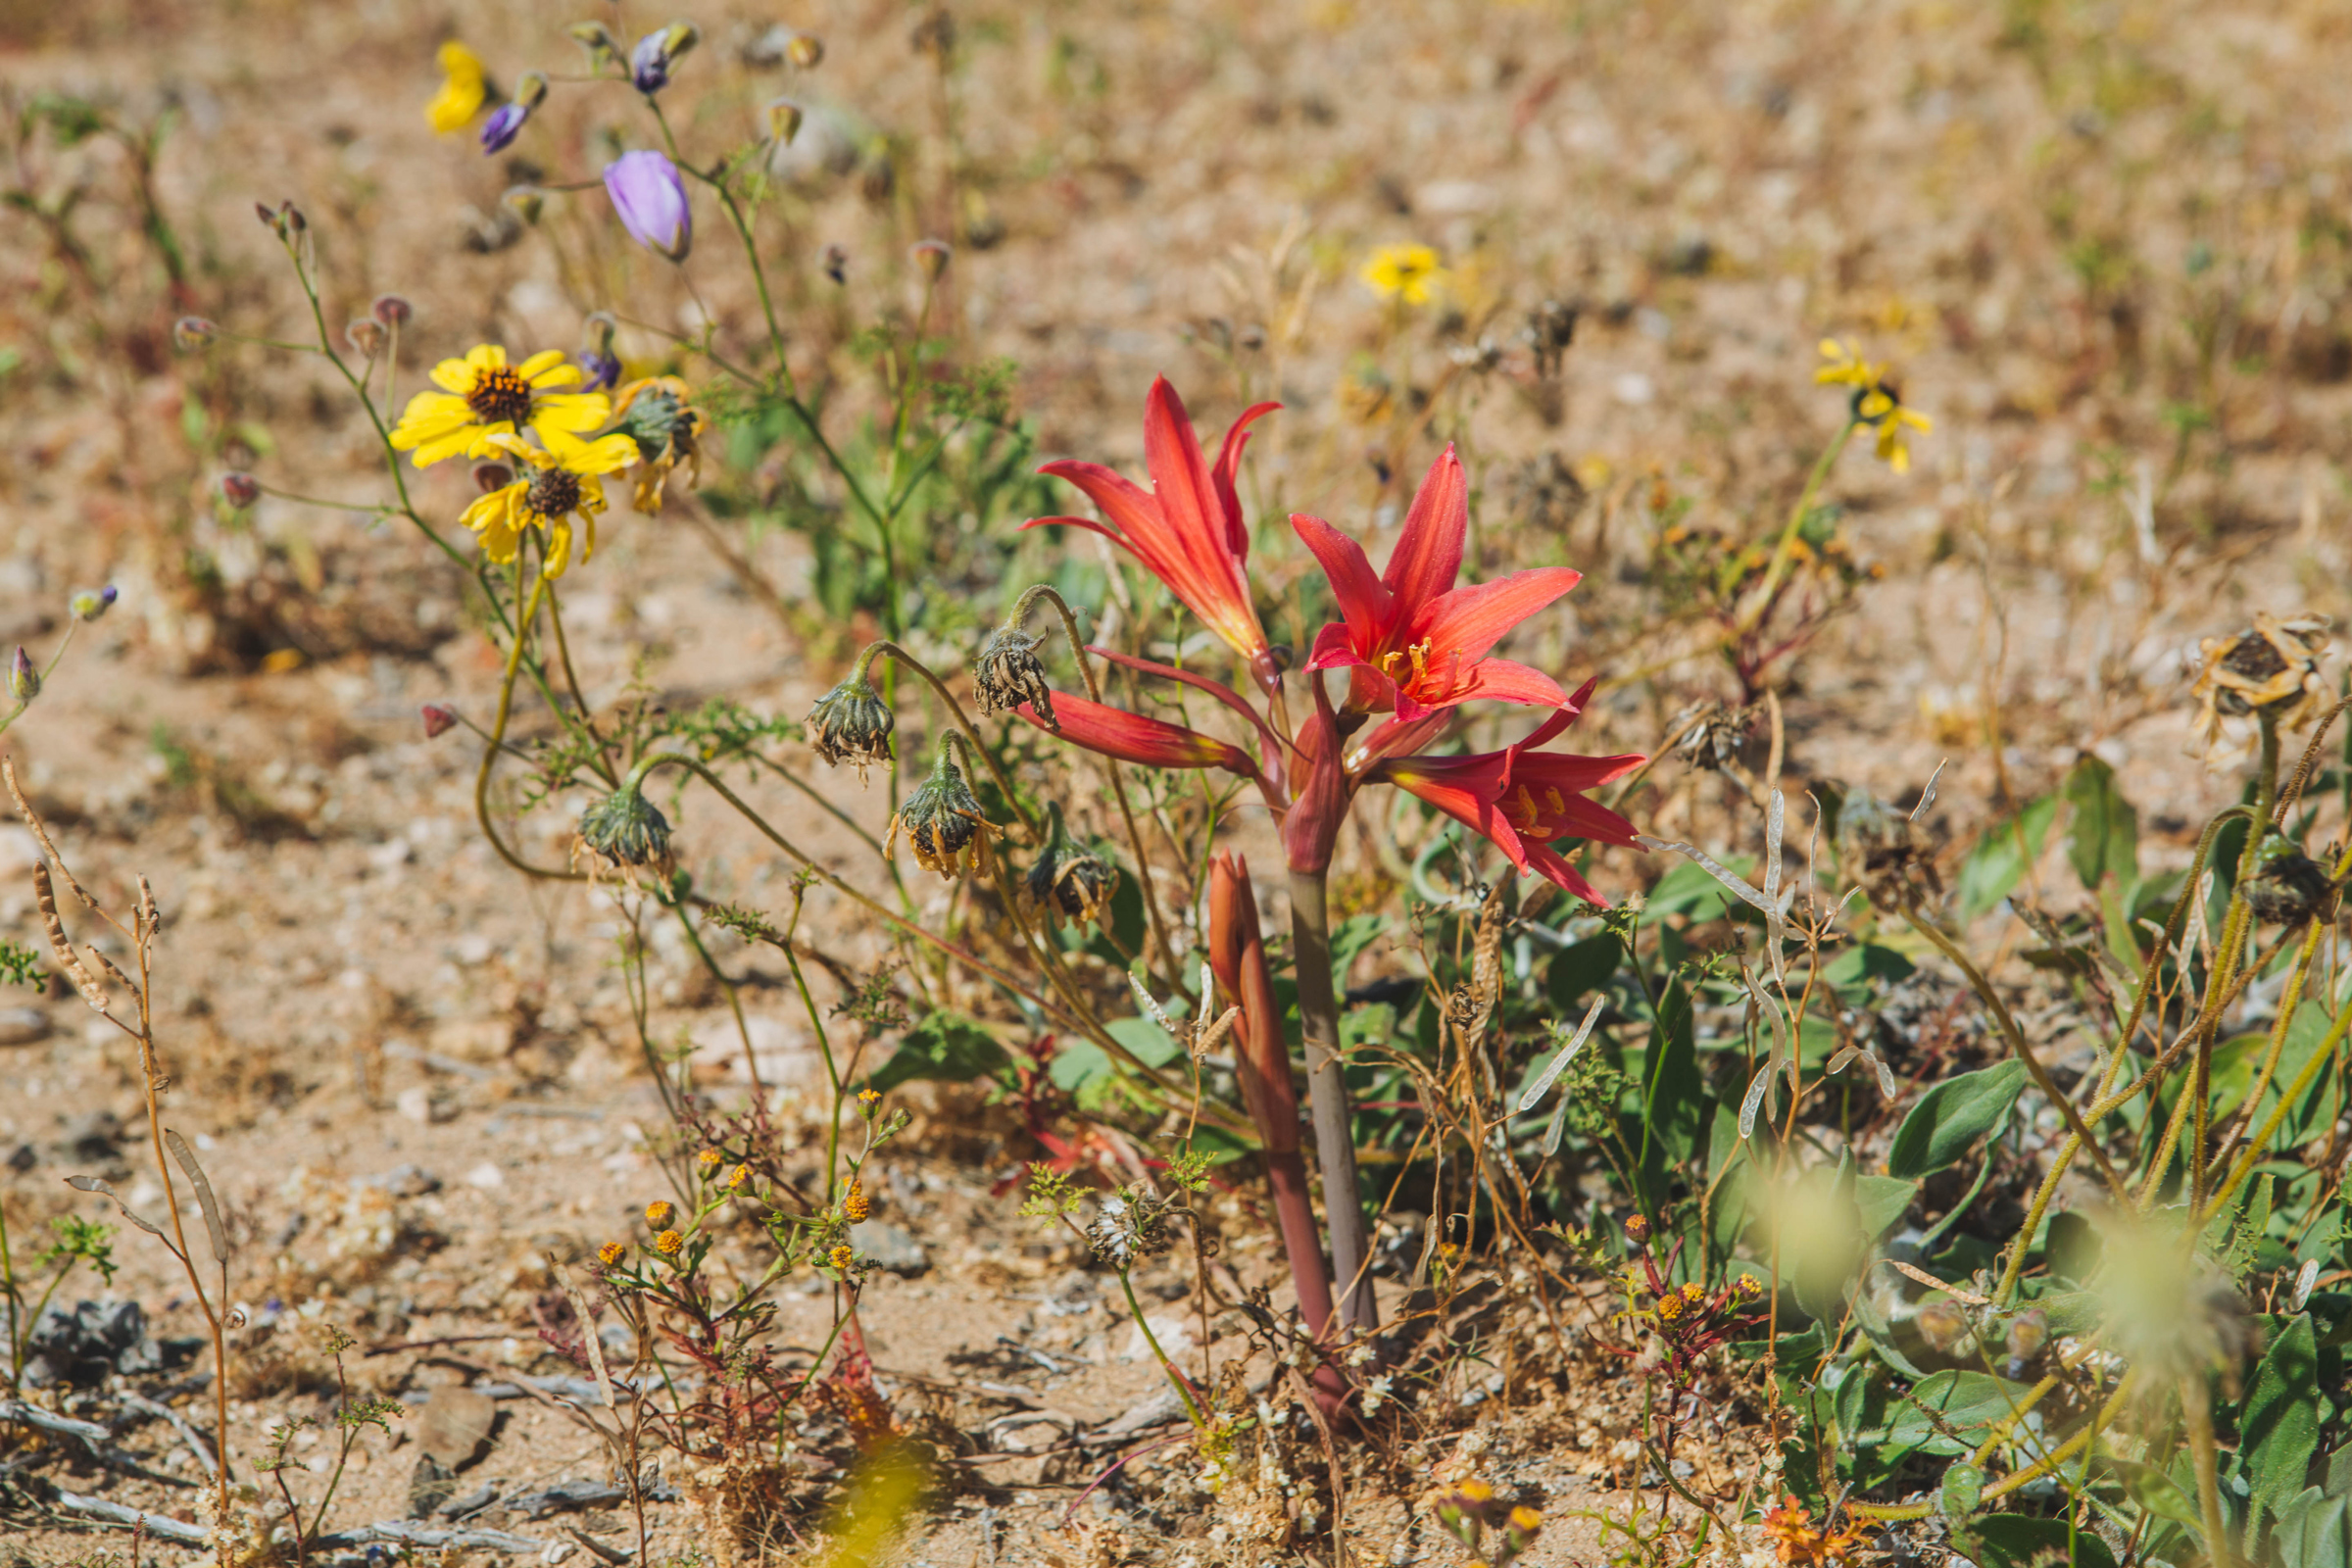 añañuca roja (Rhodophiala phycelloides) en desierto florido 2017. Créditos: Amelia Órtuzar